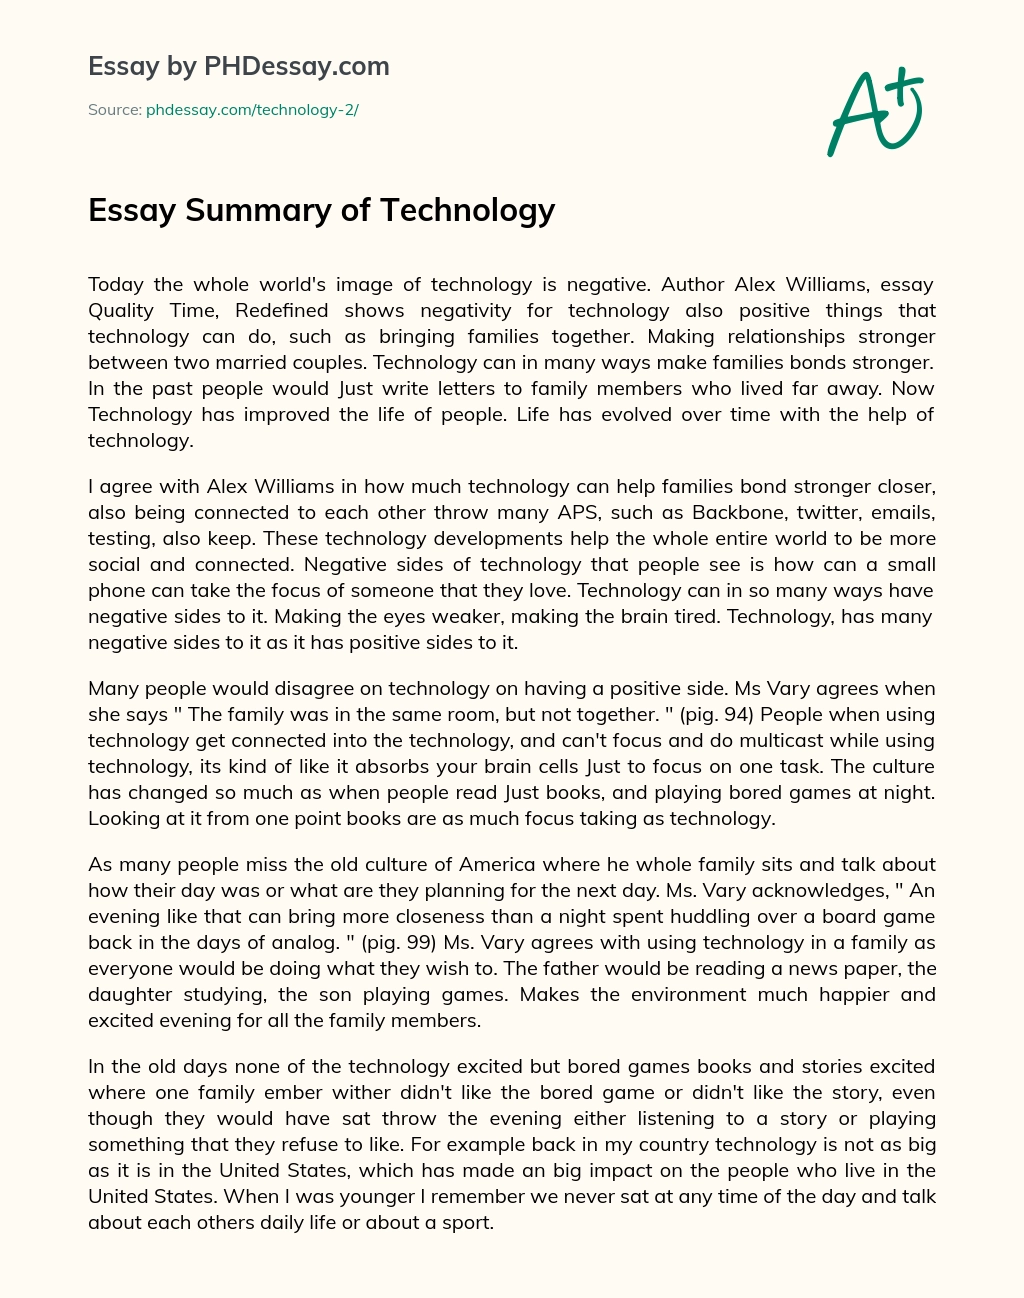 Essay Summary of Technology essay